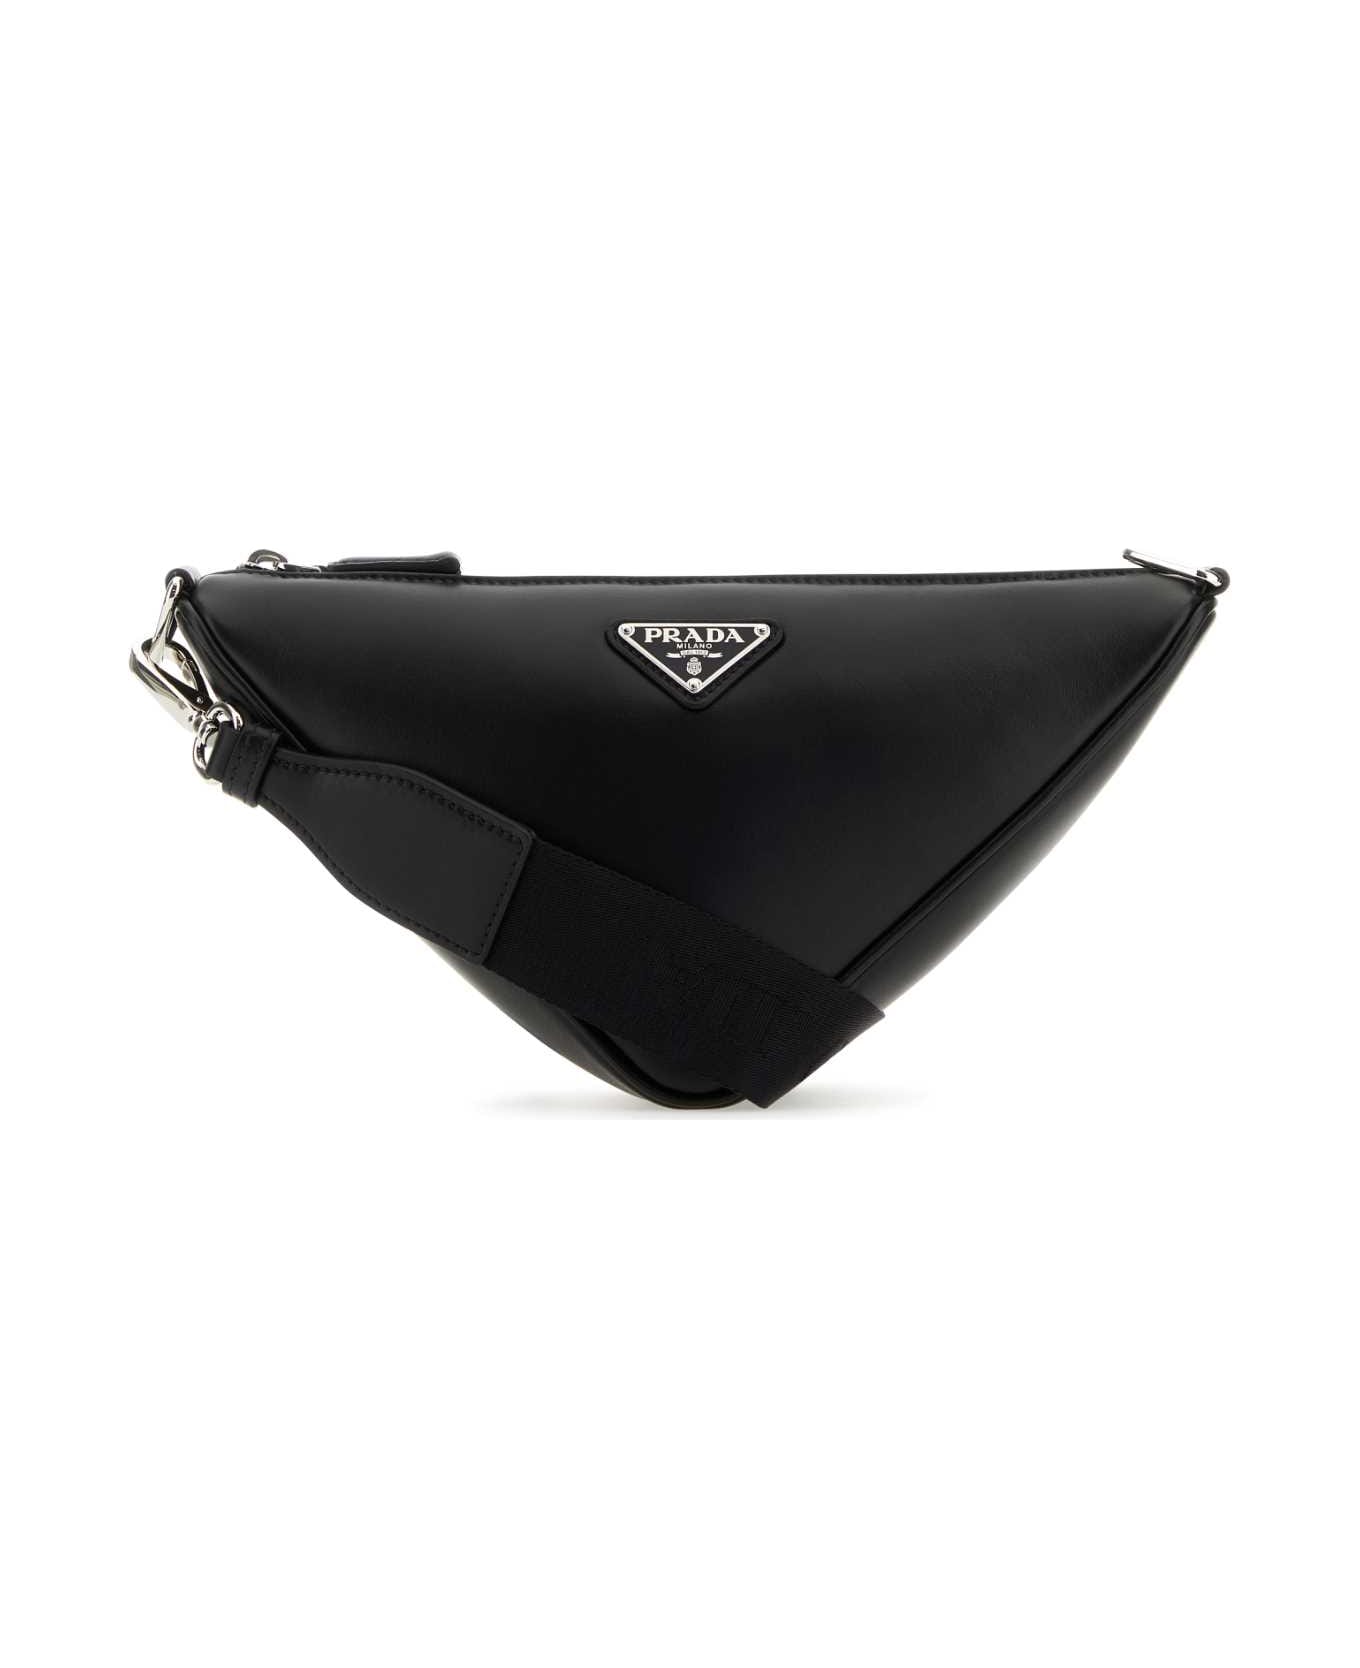 Prada Black Leather Triangle Crossbody Bag - NERO